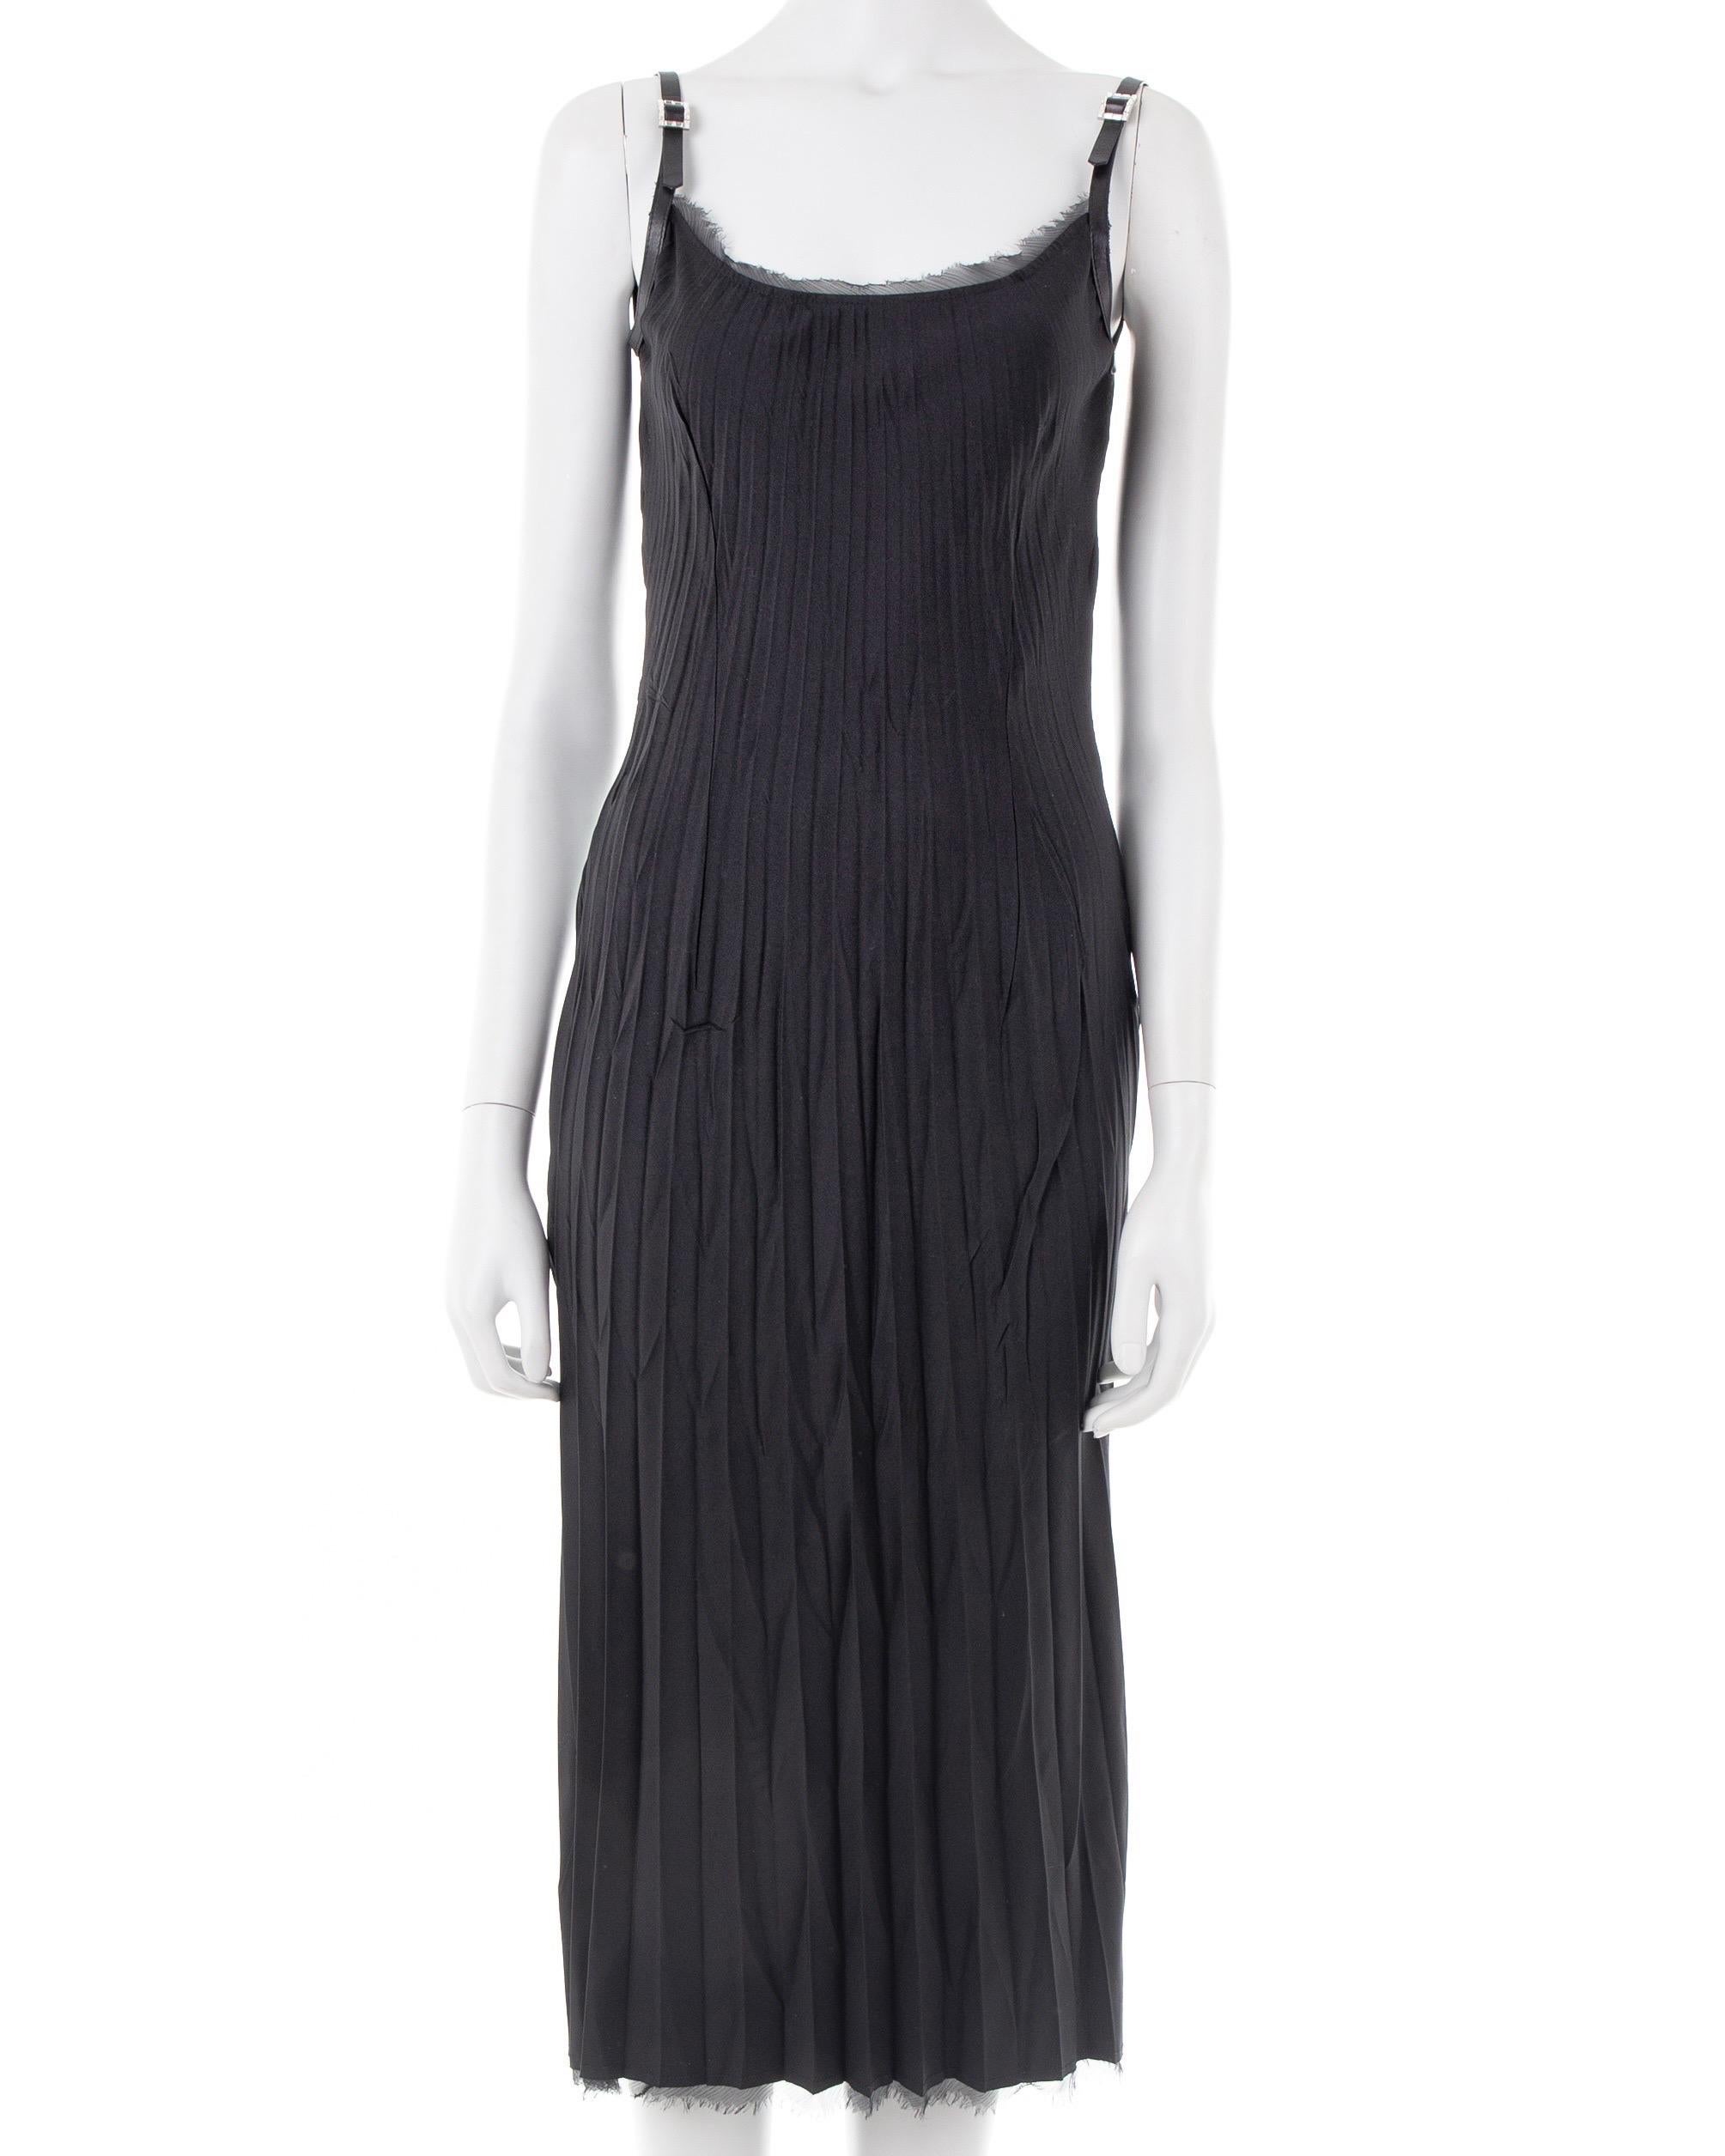 Ermanno Scervino black silk crinkled dress with crystal straps, 2000s ca. For Sale